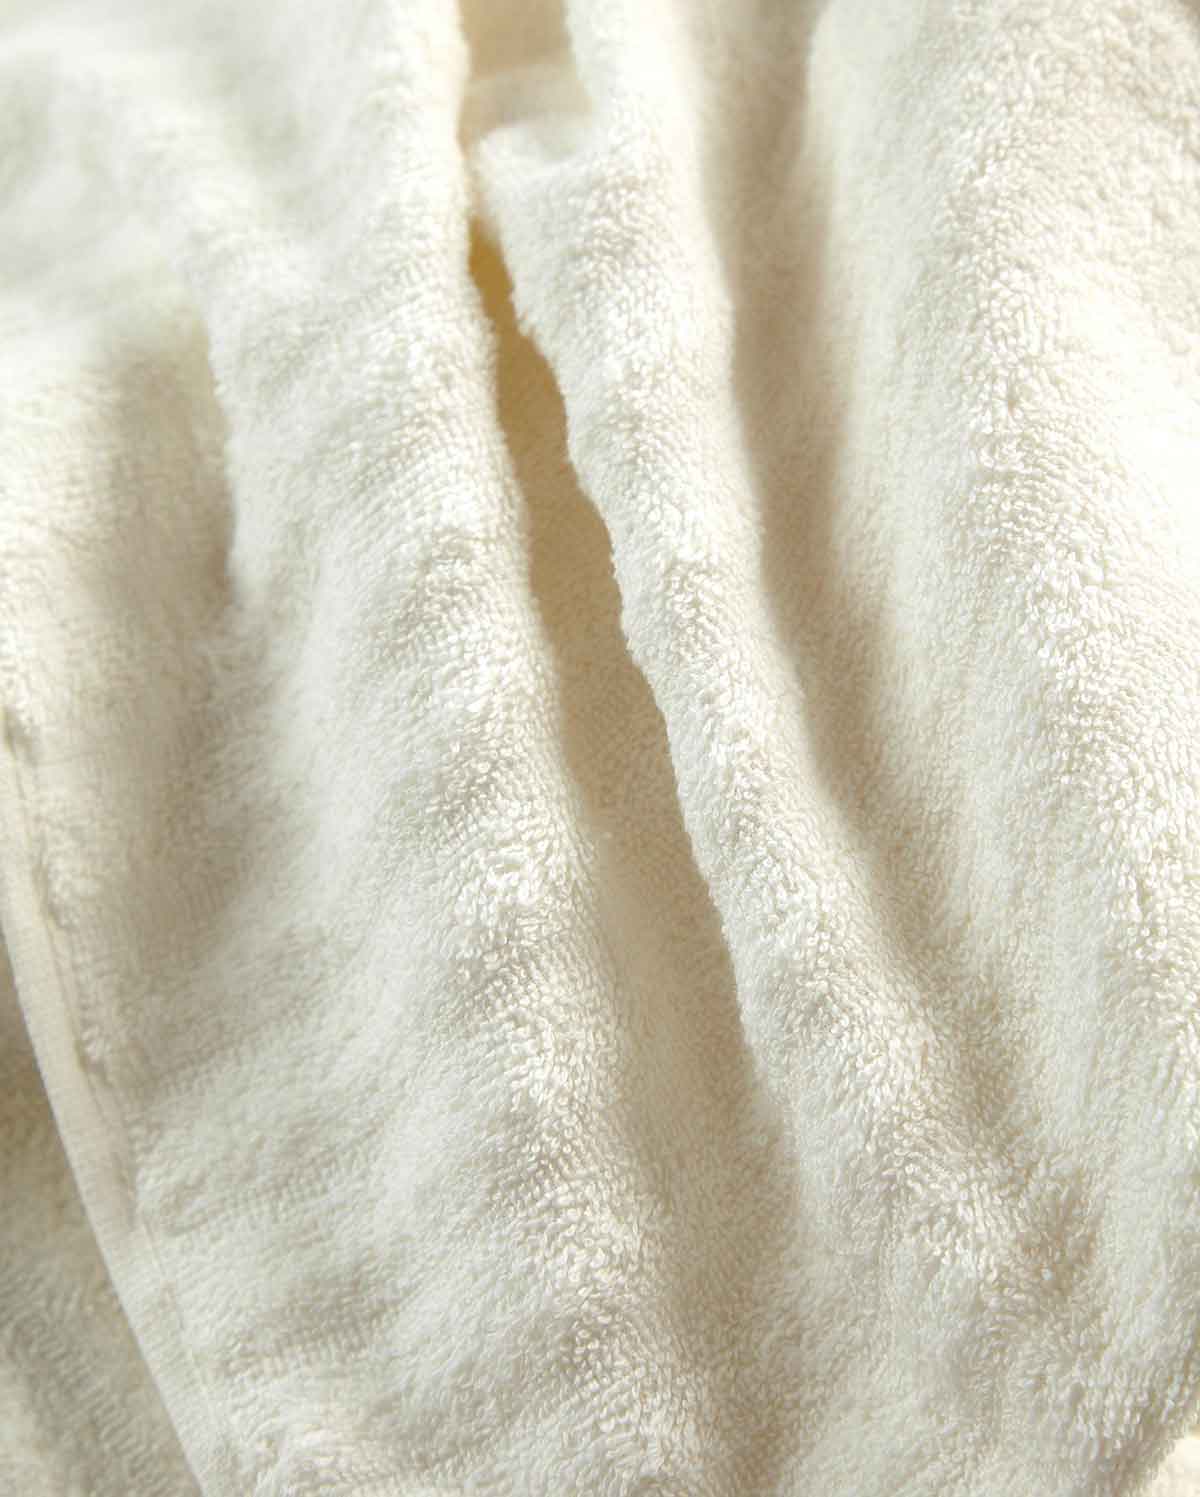 Ribbed Soft Cotton Towel Set - Cream (2 Towels)